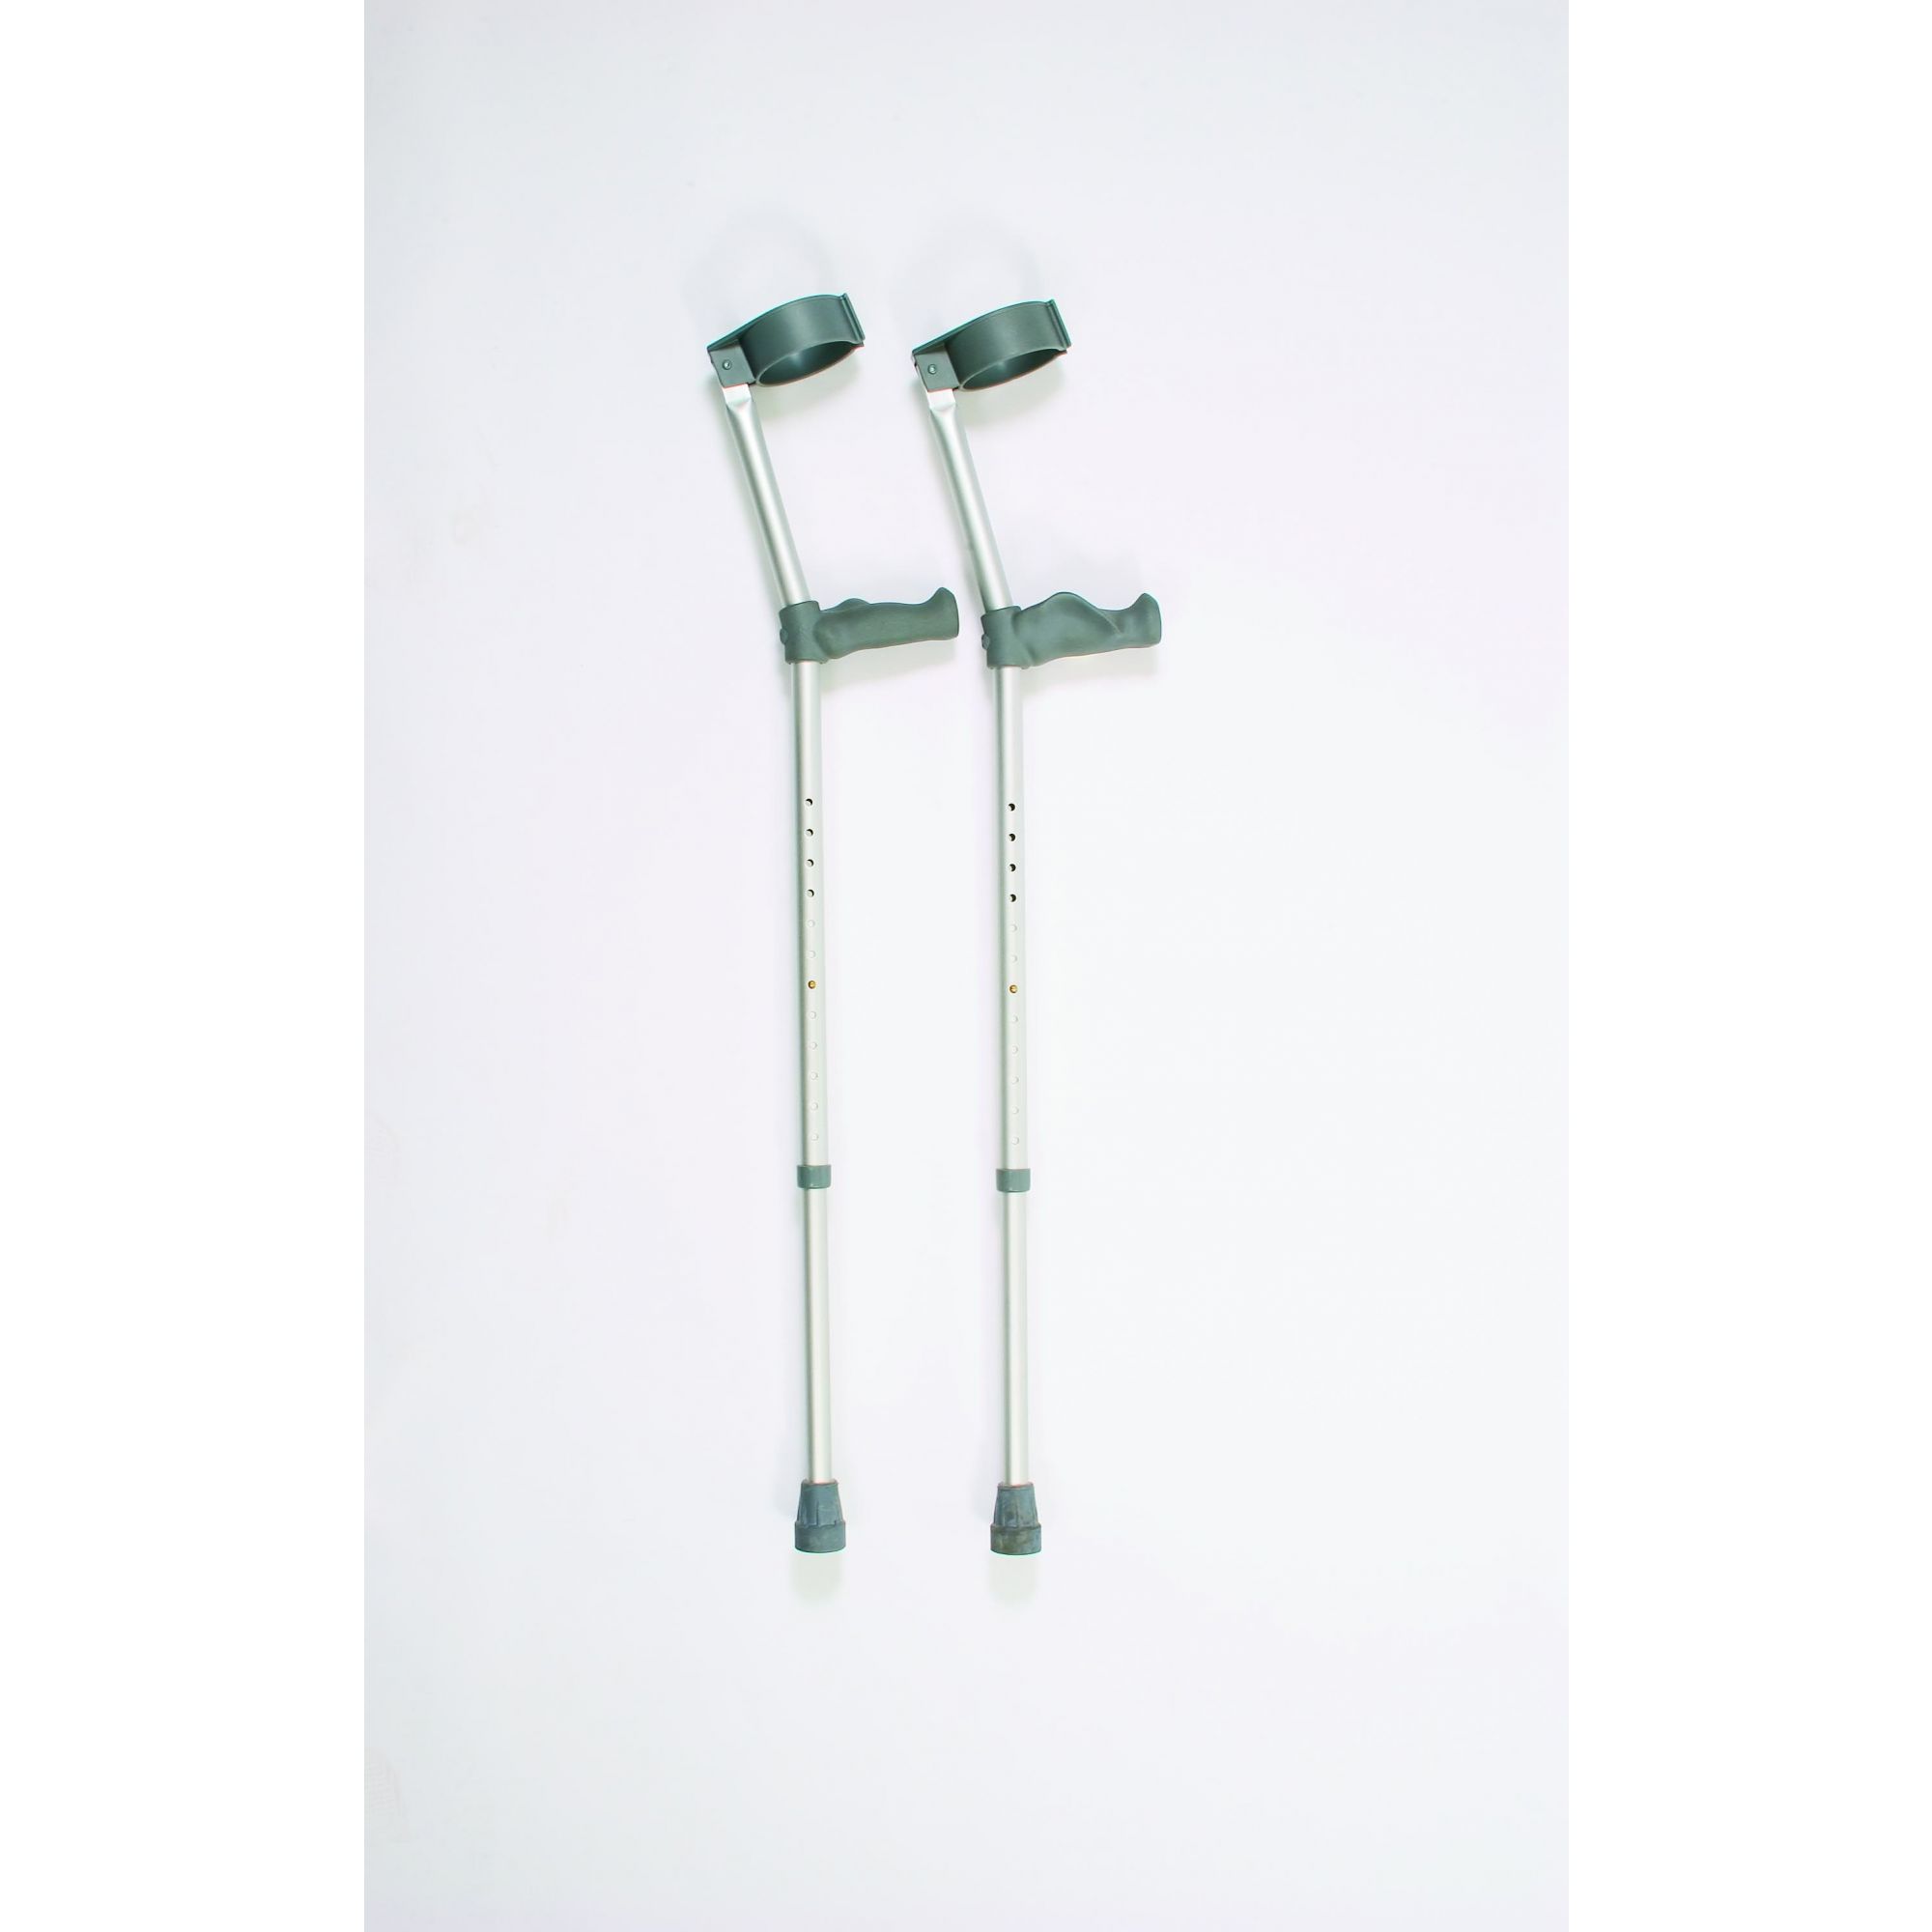 Days Adjustable Crutches w/ ergonomic grip image cover